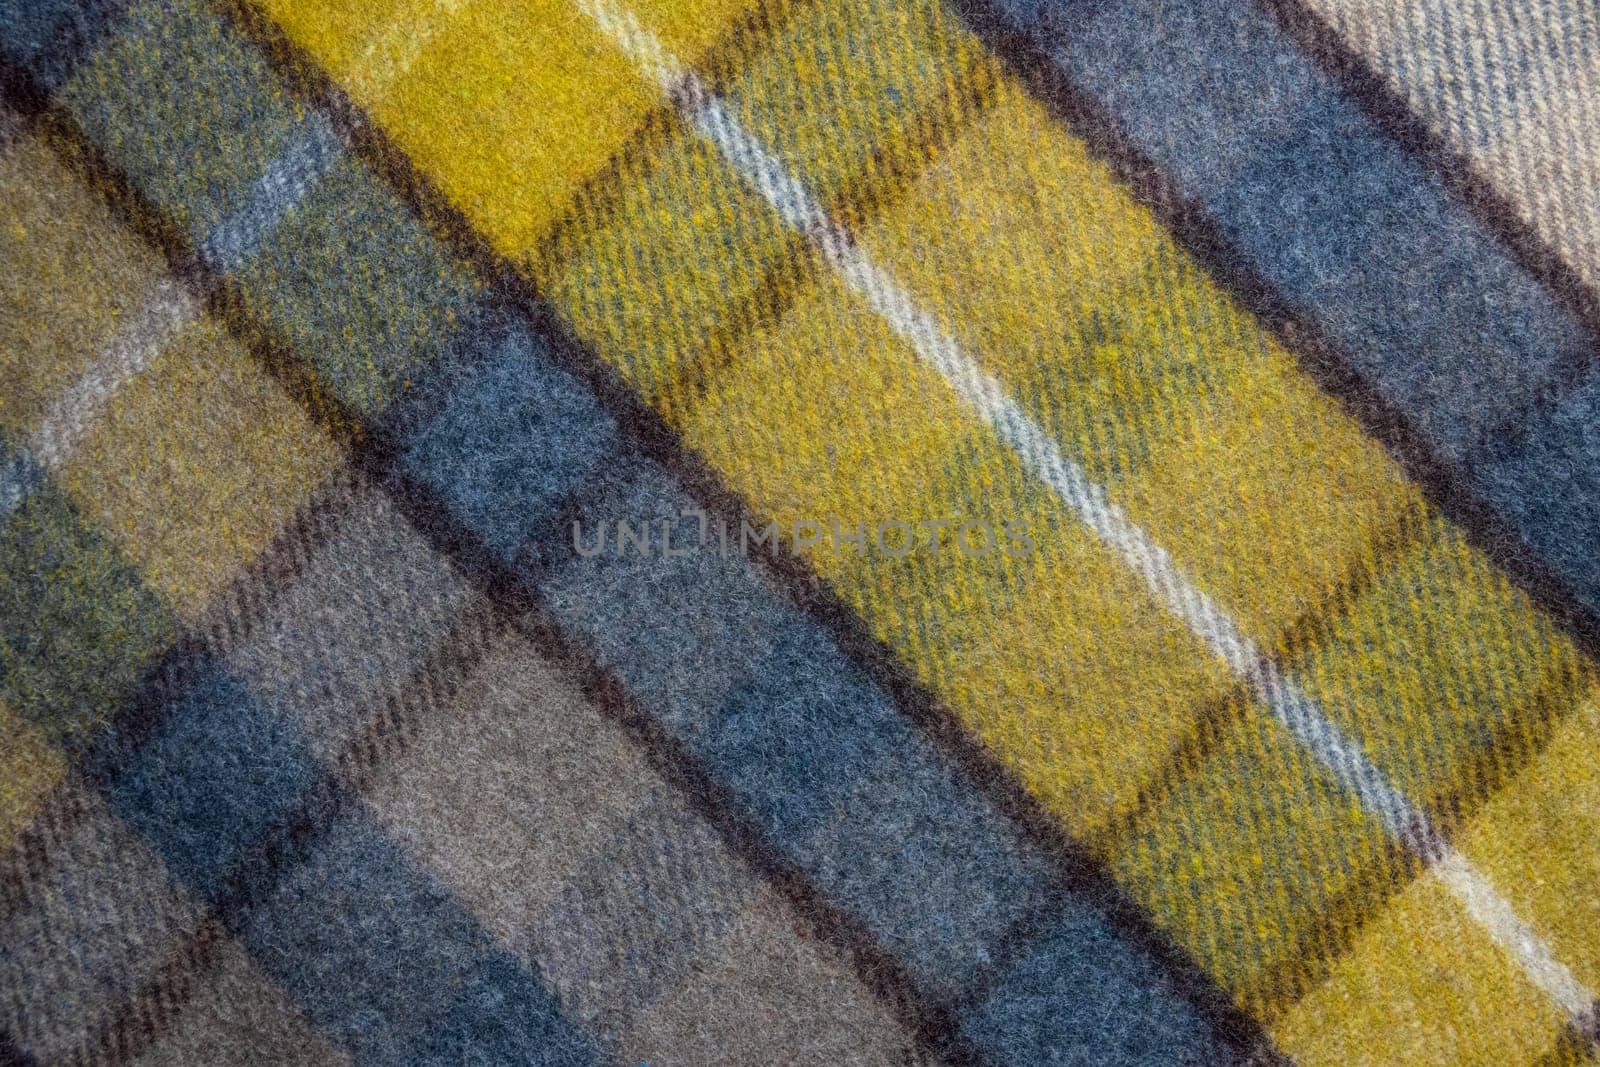 Background Texture Of A Tartan Plaid Blanket by mrdoomits